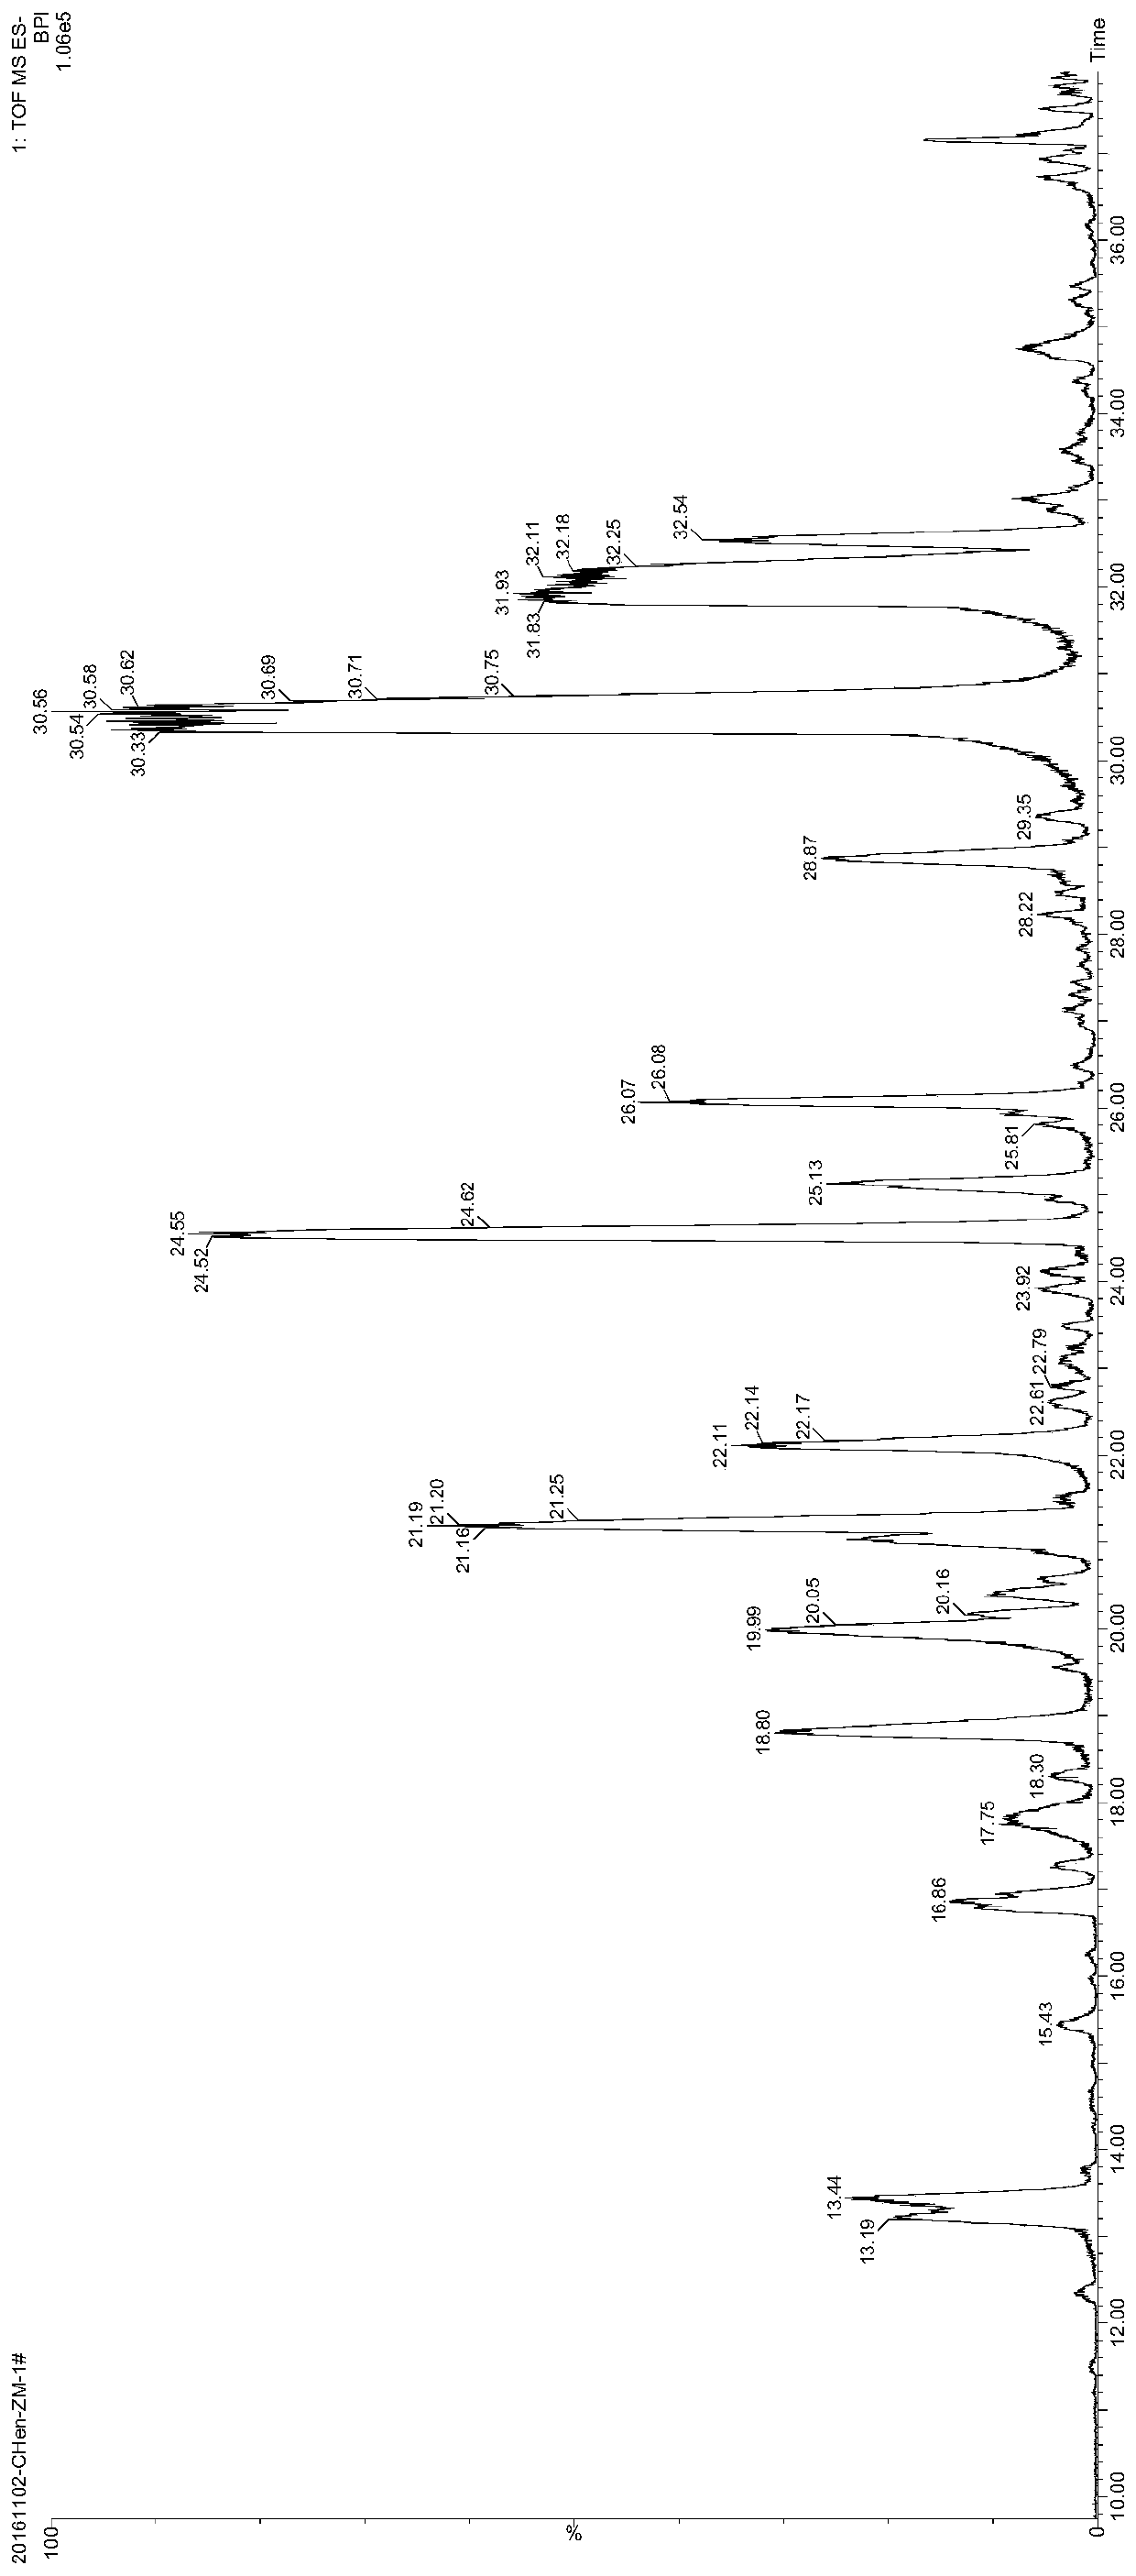 Extraction Method of Bivapirox Compounds in Anemarrhena Fibrous Roots